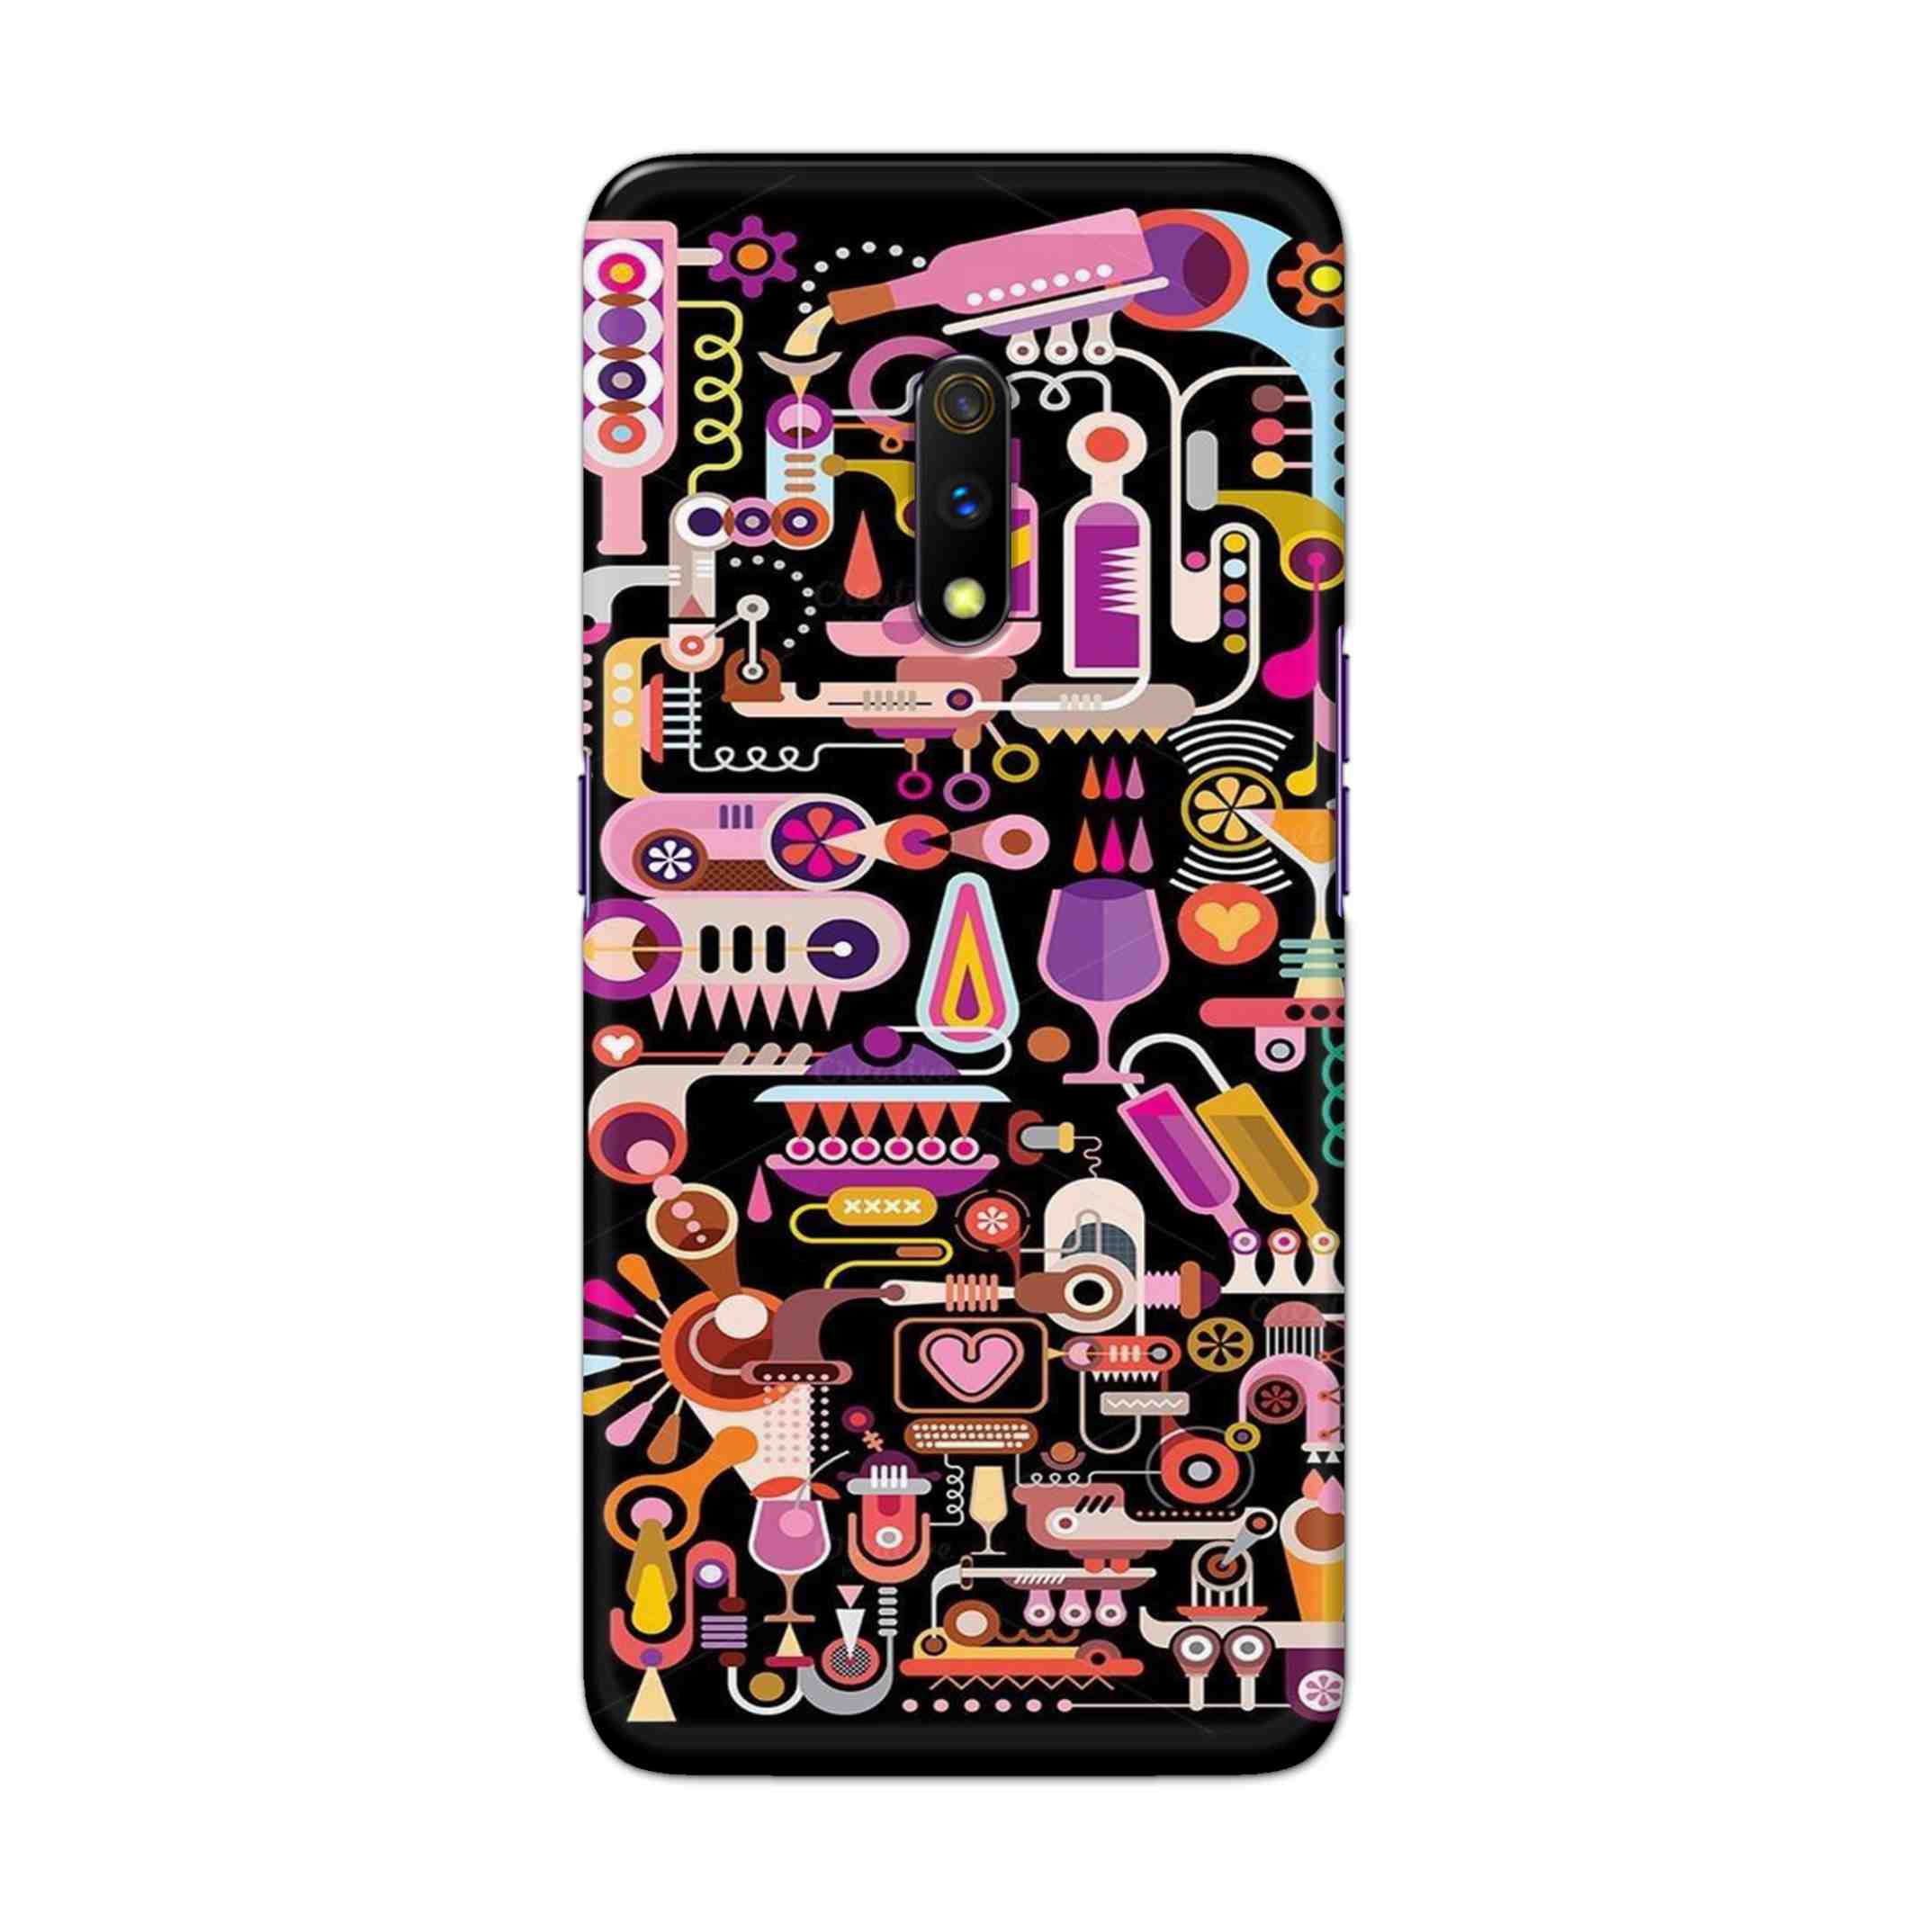 Buy Lab Art Hard Back Mobile Phone Case Cover For Oppo Realme X Online